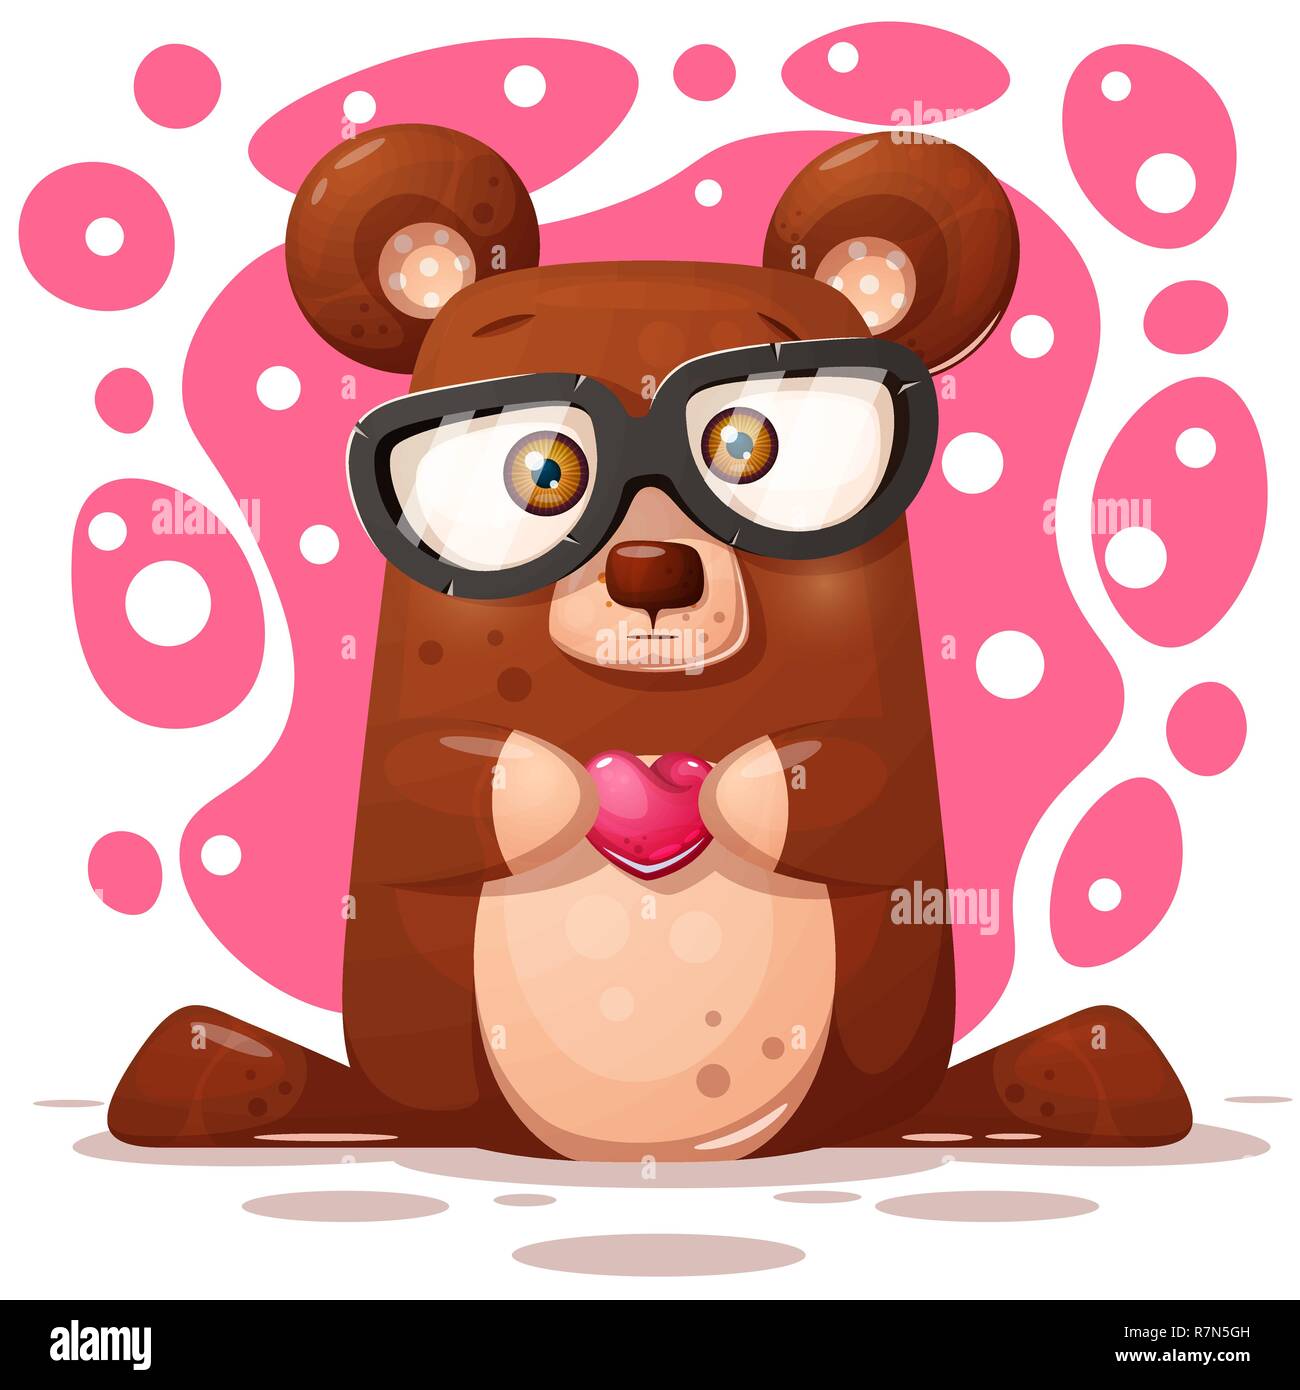 Cute, funny bear illustration. Animal character. Stock Vector